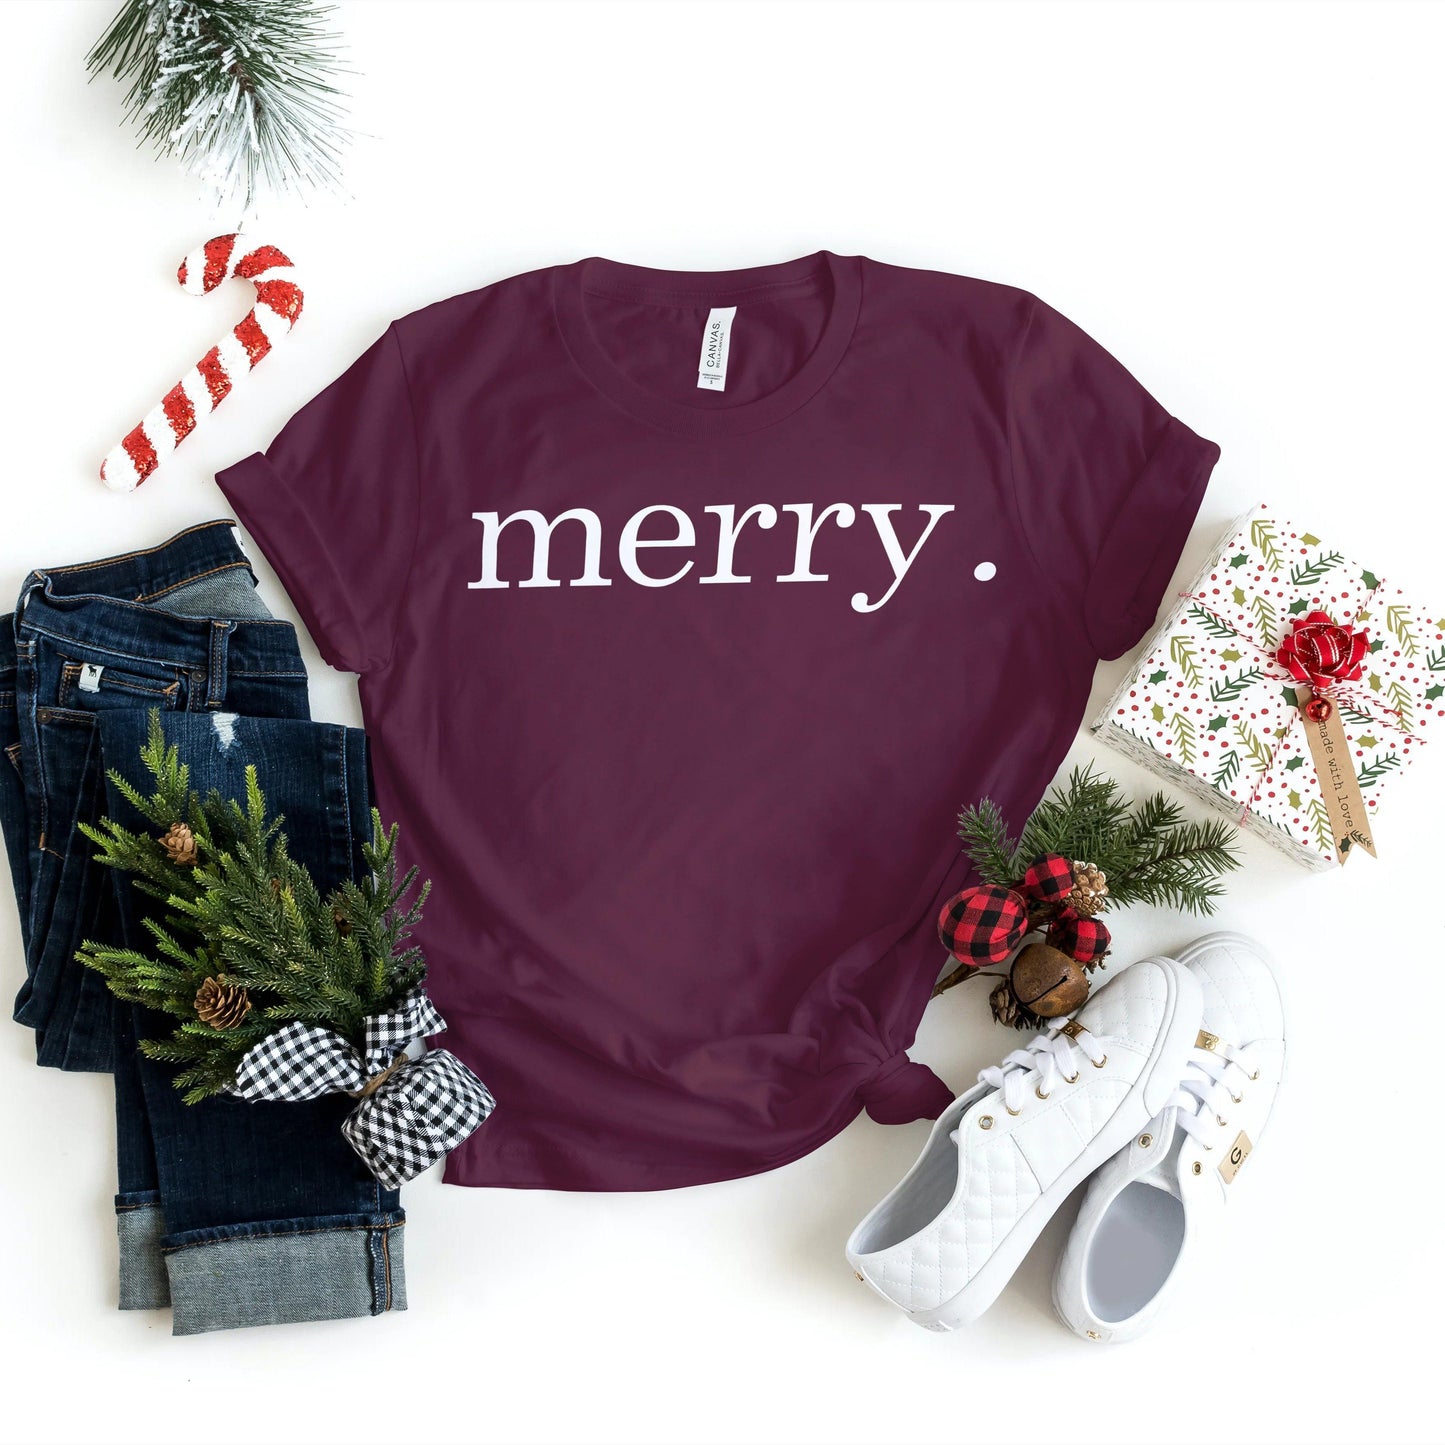 Christmas Shirts - Merry - Xmas tshirt - Holiday Shirts - Gifts - Healthy Wealthy Skinny